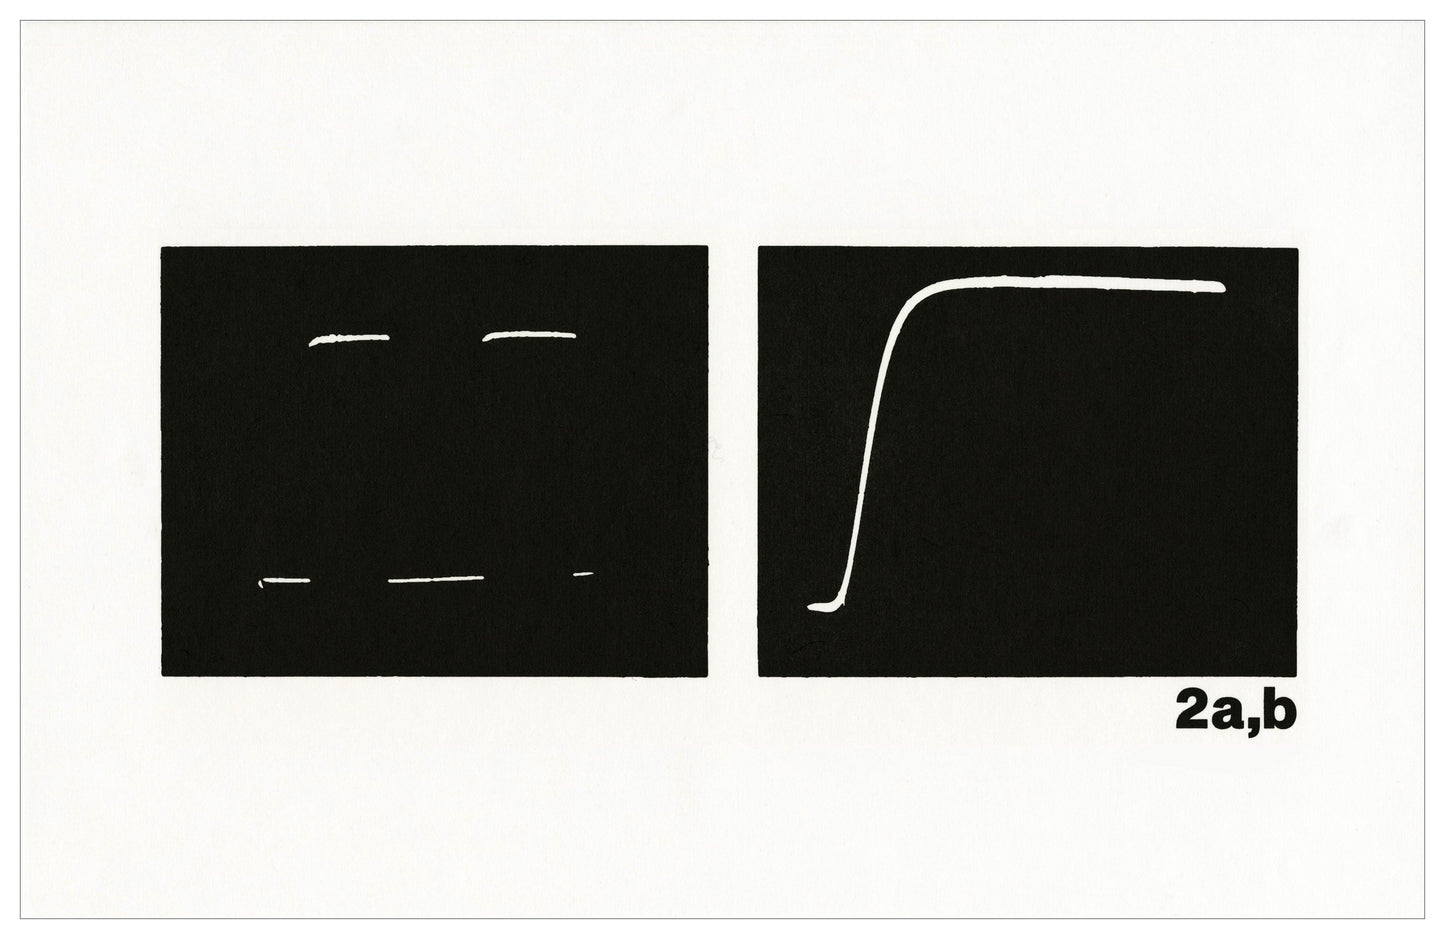 Micah Lexier - The Oscilloscope Drawings (2a,b)